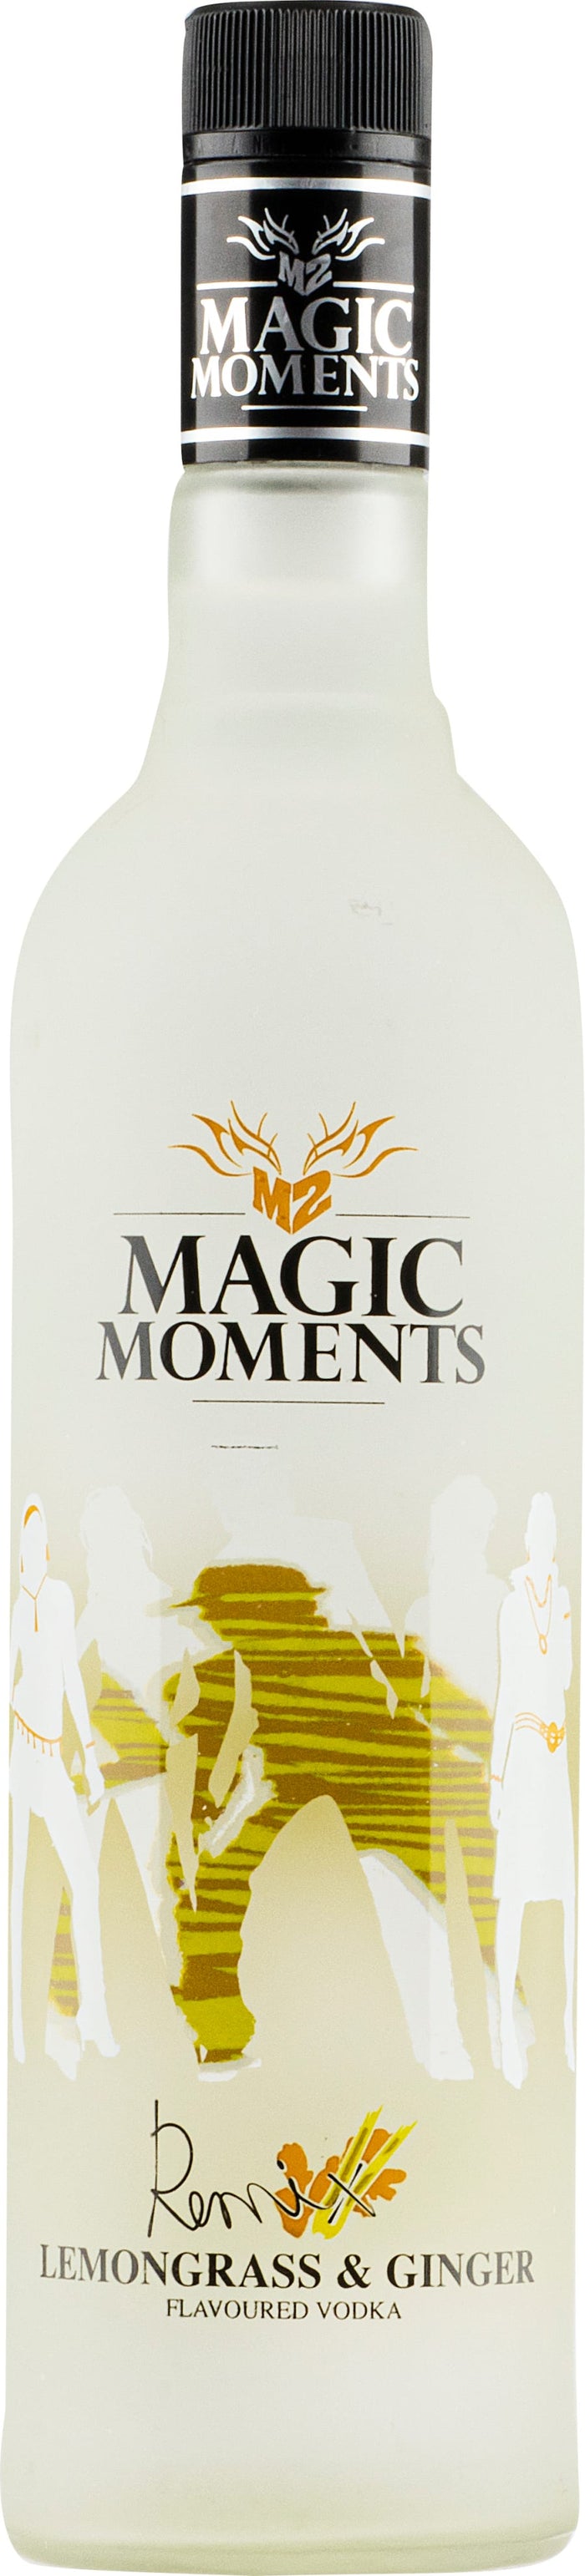 Magic Moments Remix Lemongrass & Ginger Vodka